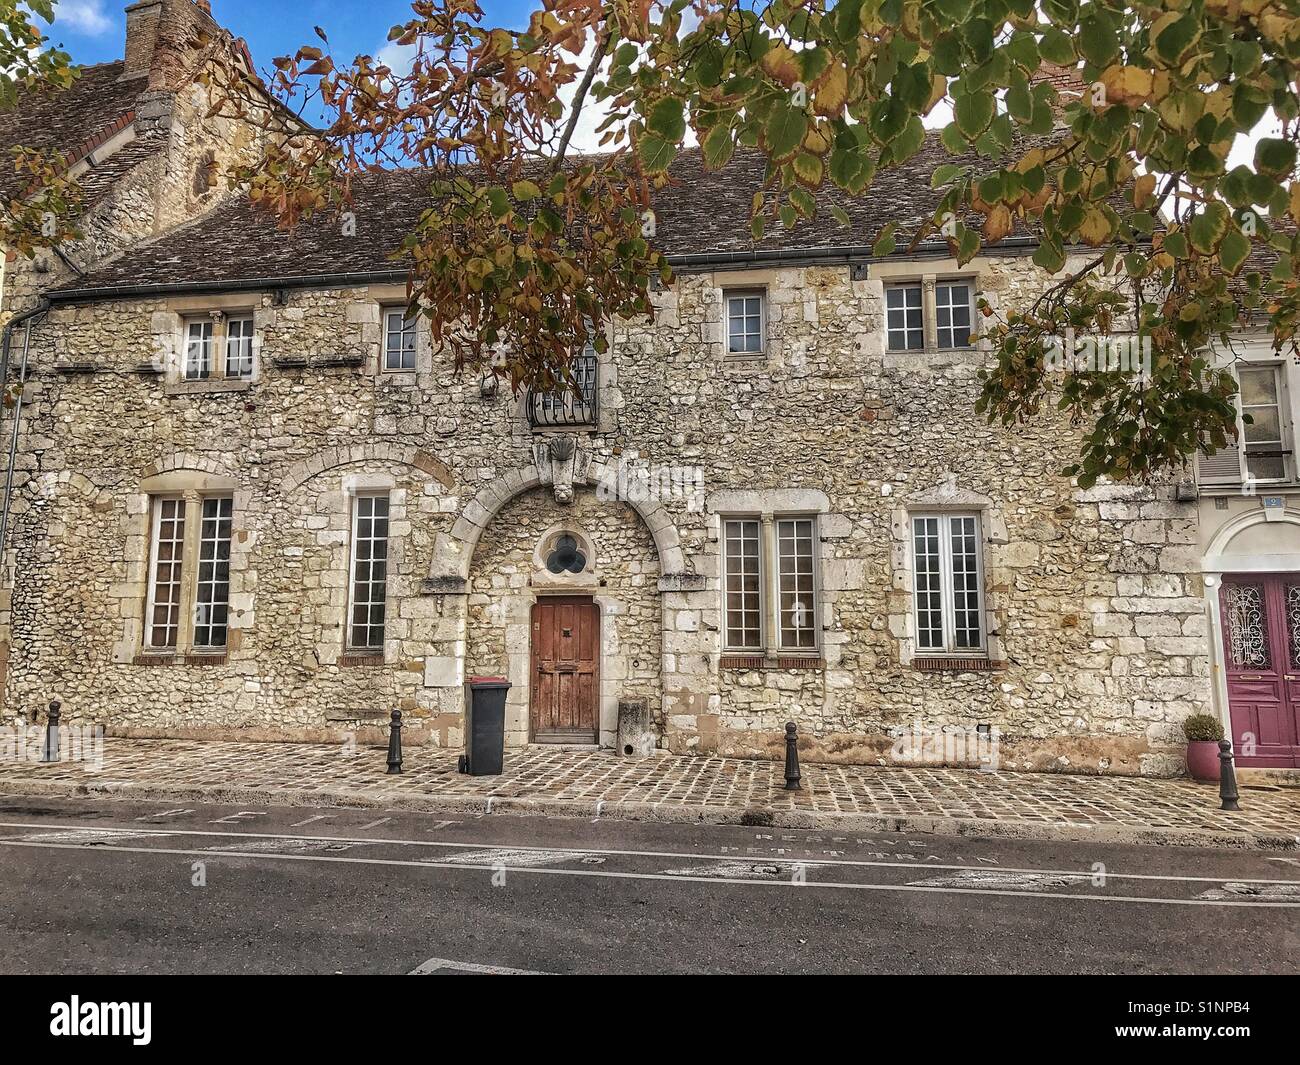 Medieval building in Provins, France. Stock Photo